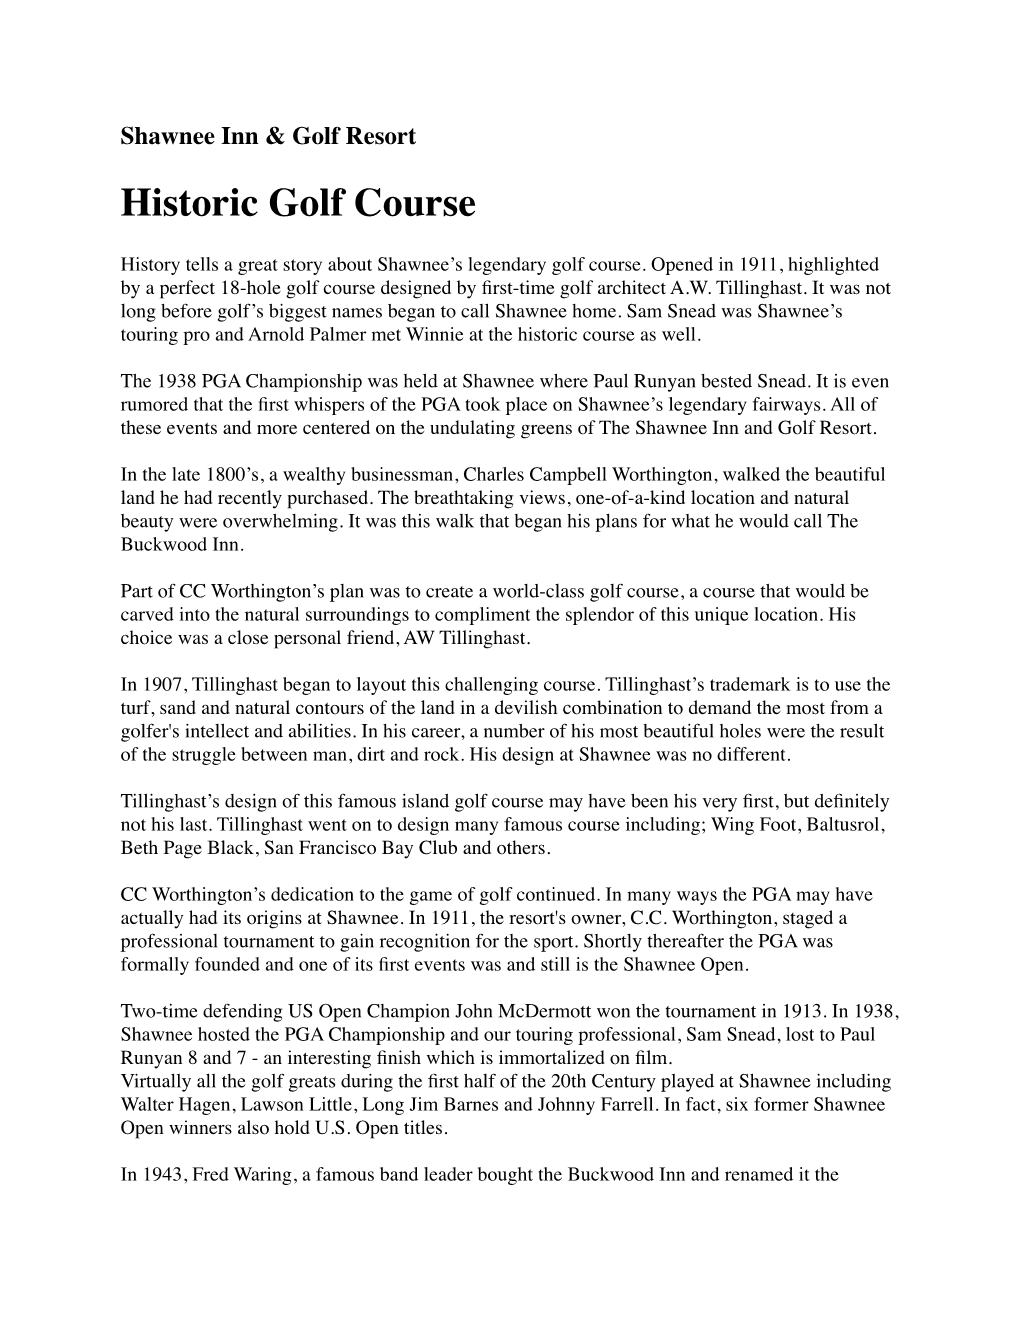 Historic Golf Course